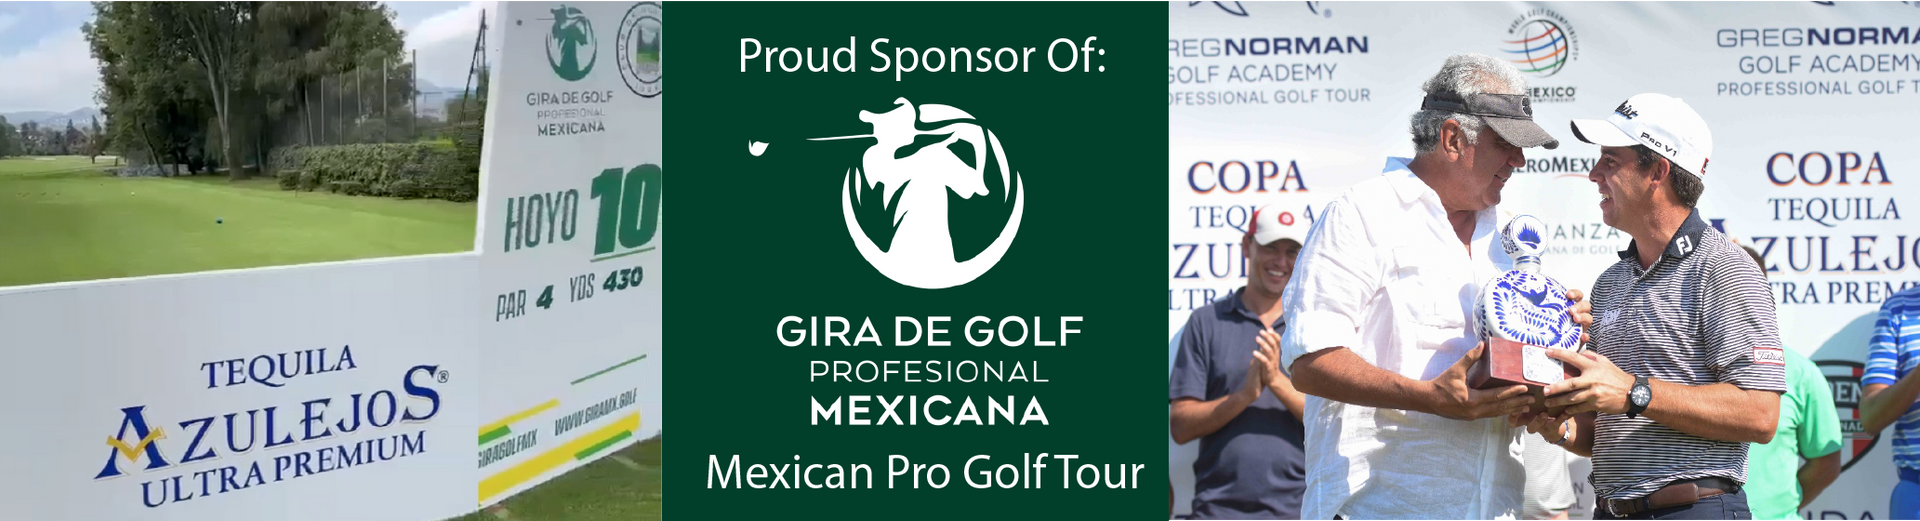 Mexican PGA Tour Tequila Azulejos Official Sponsor